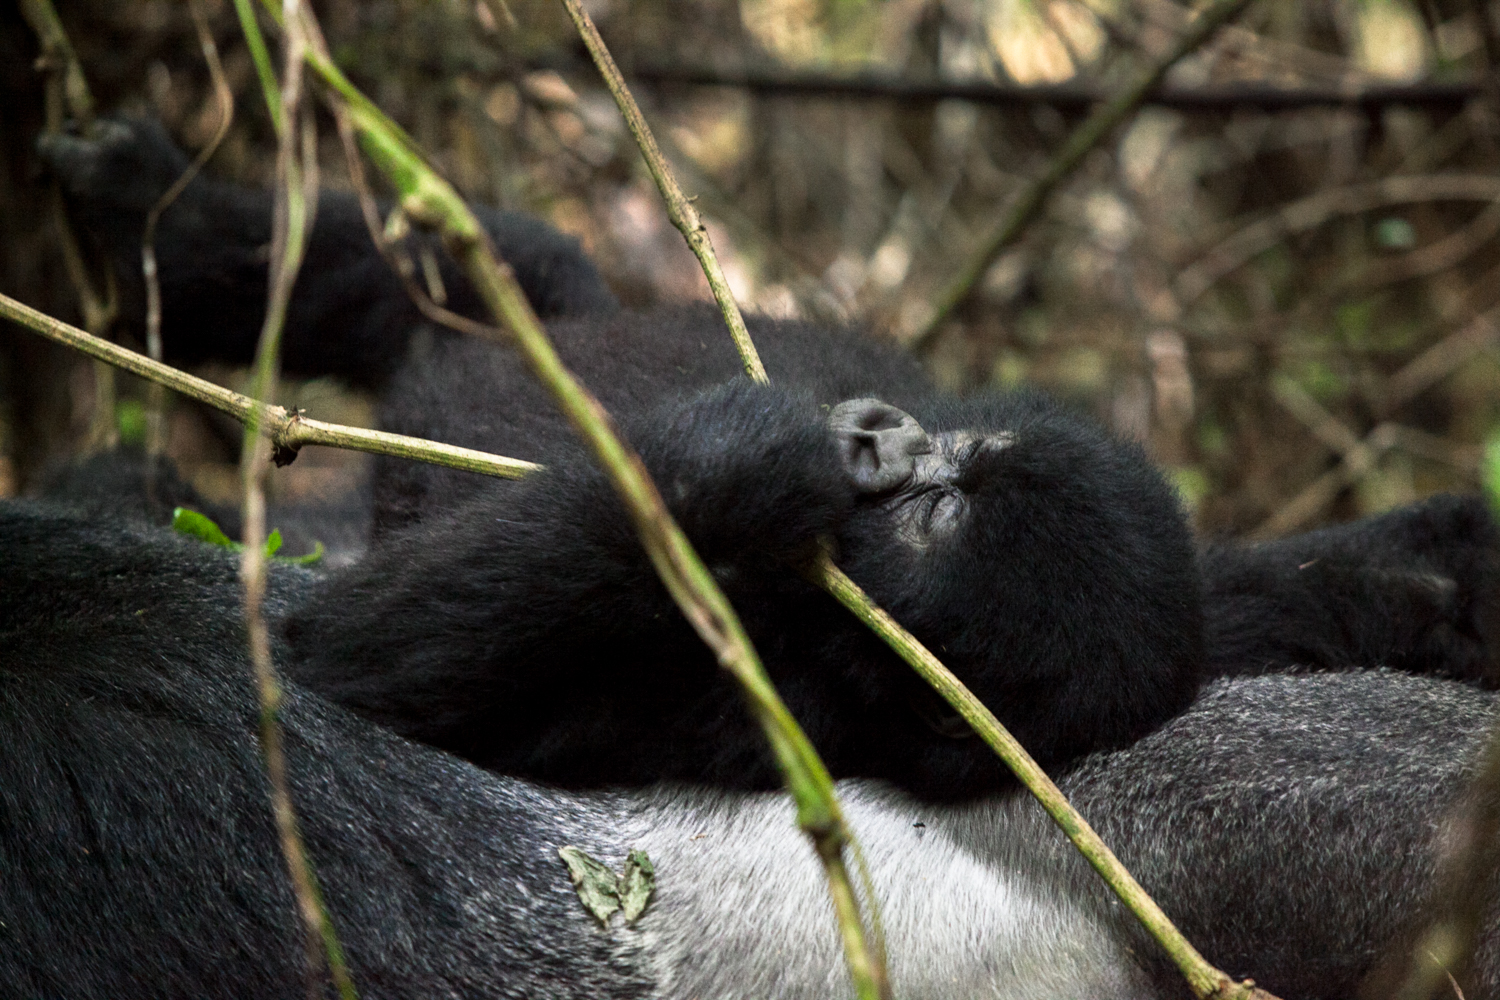 Eric Kruszewski photographs a mountain gorillas in Rwanda’s Volcanoes National Park.